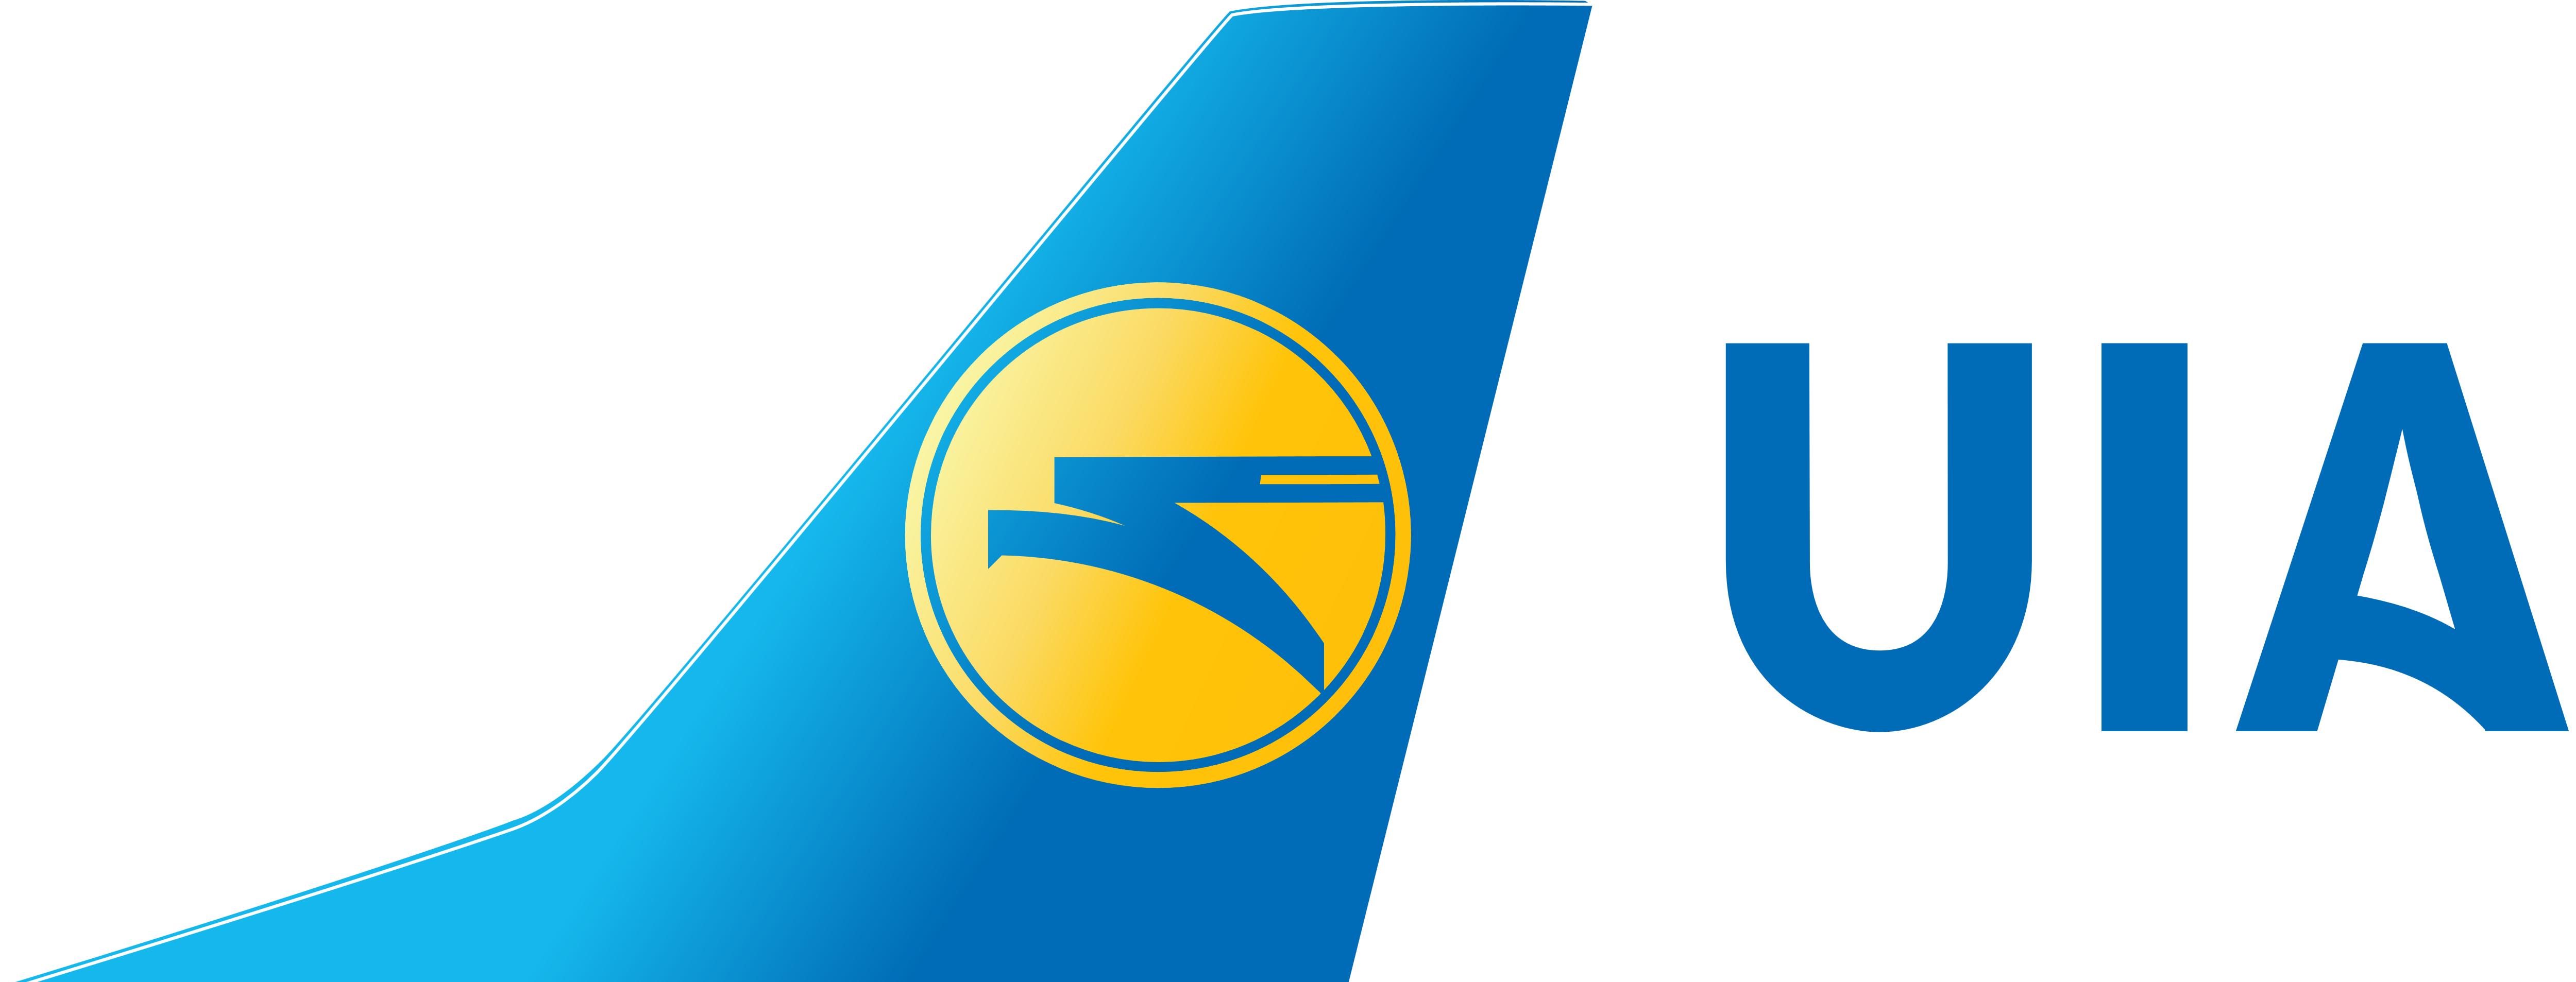 Resultado de imagen para UIA Ukraine Airlines logo"